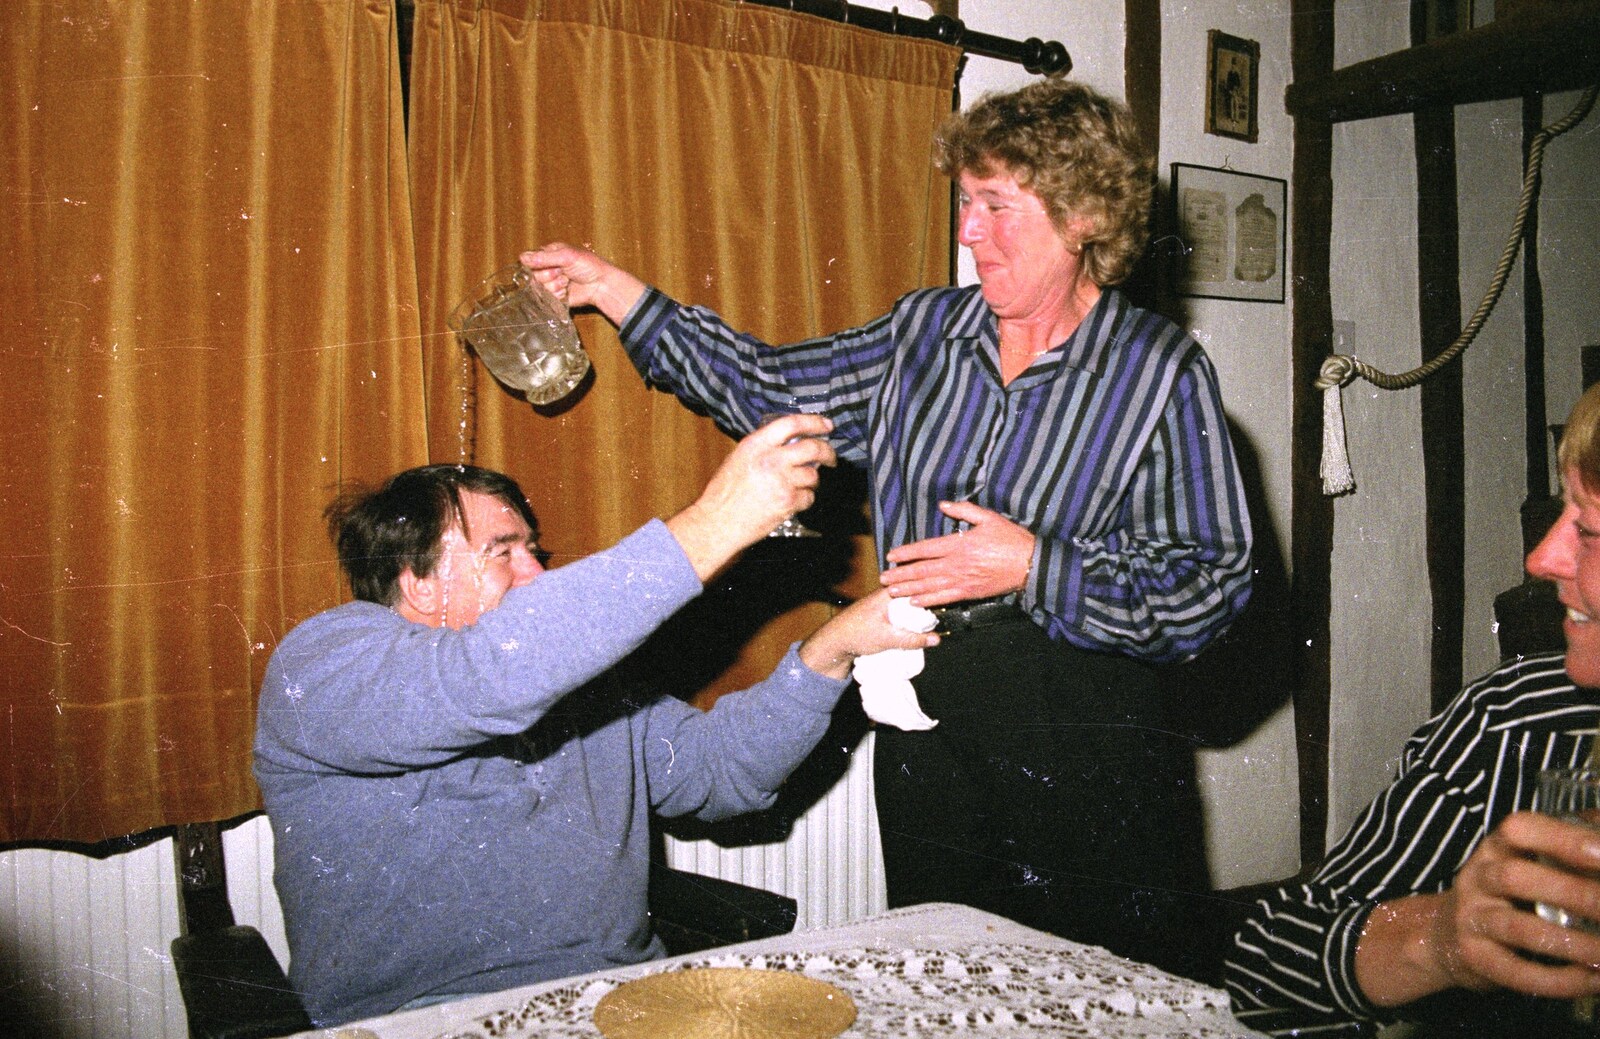 Brenda tips water on David's head from Cider Making, Stuston, Suffolk - 14th October 1991